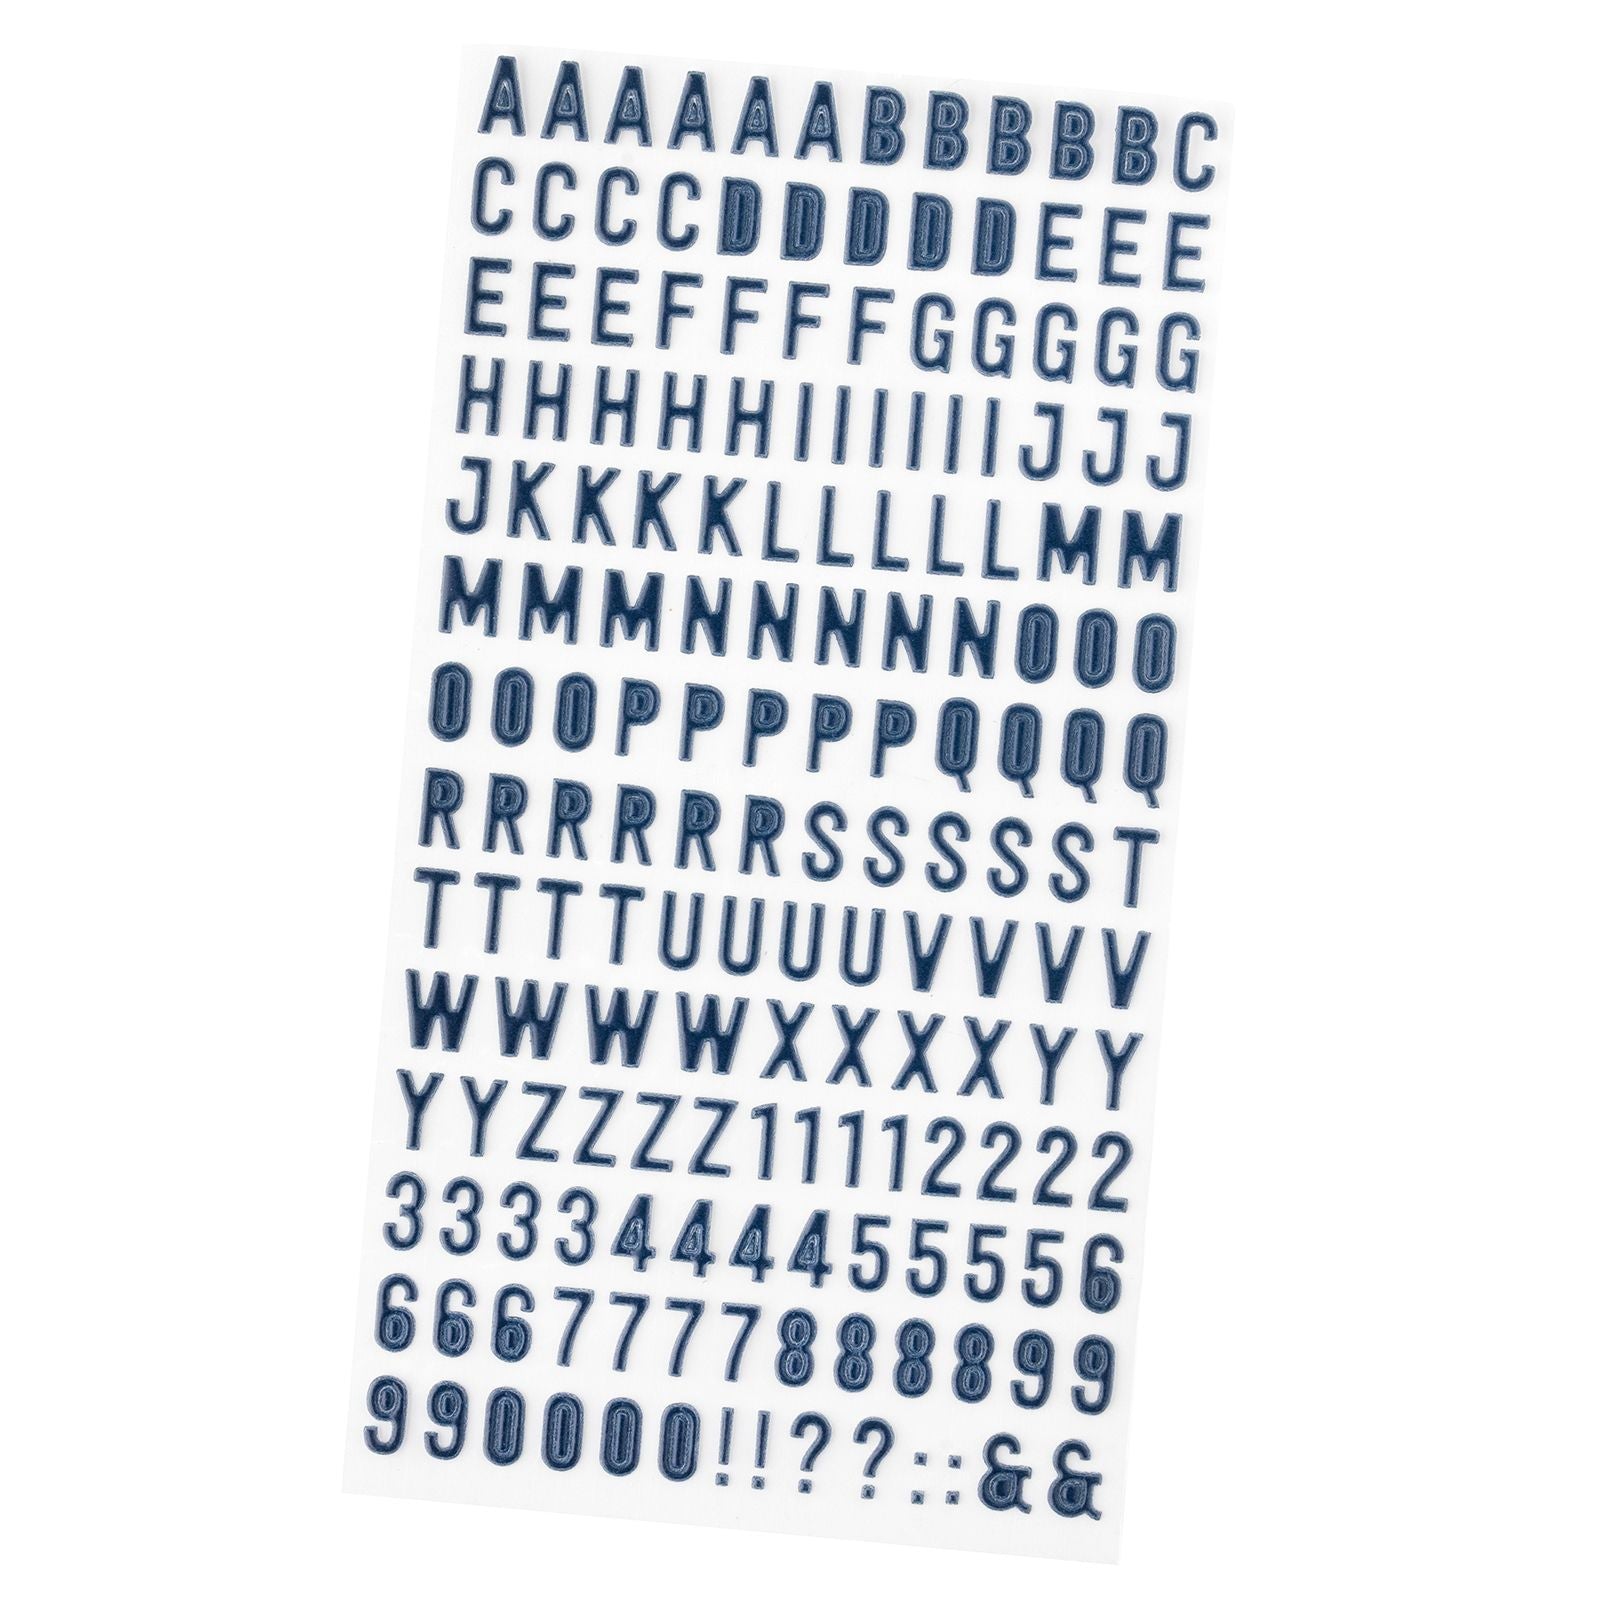 Joyful Notes Alphabet Mini Thickers Stickers / Estampas de Alfabeto Mini